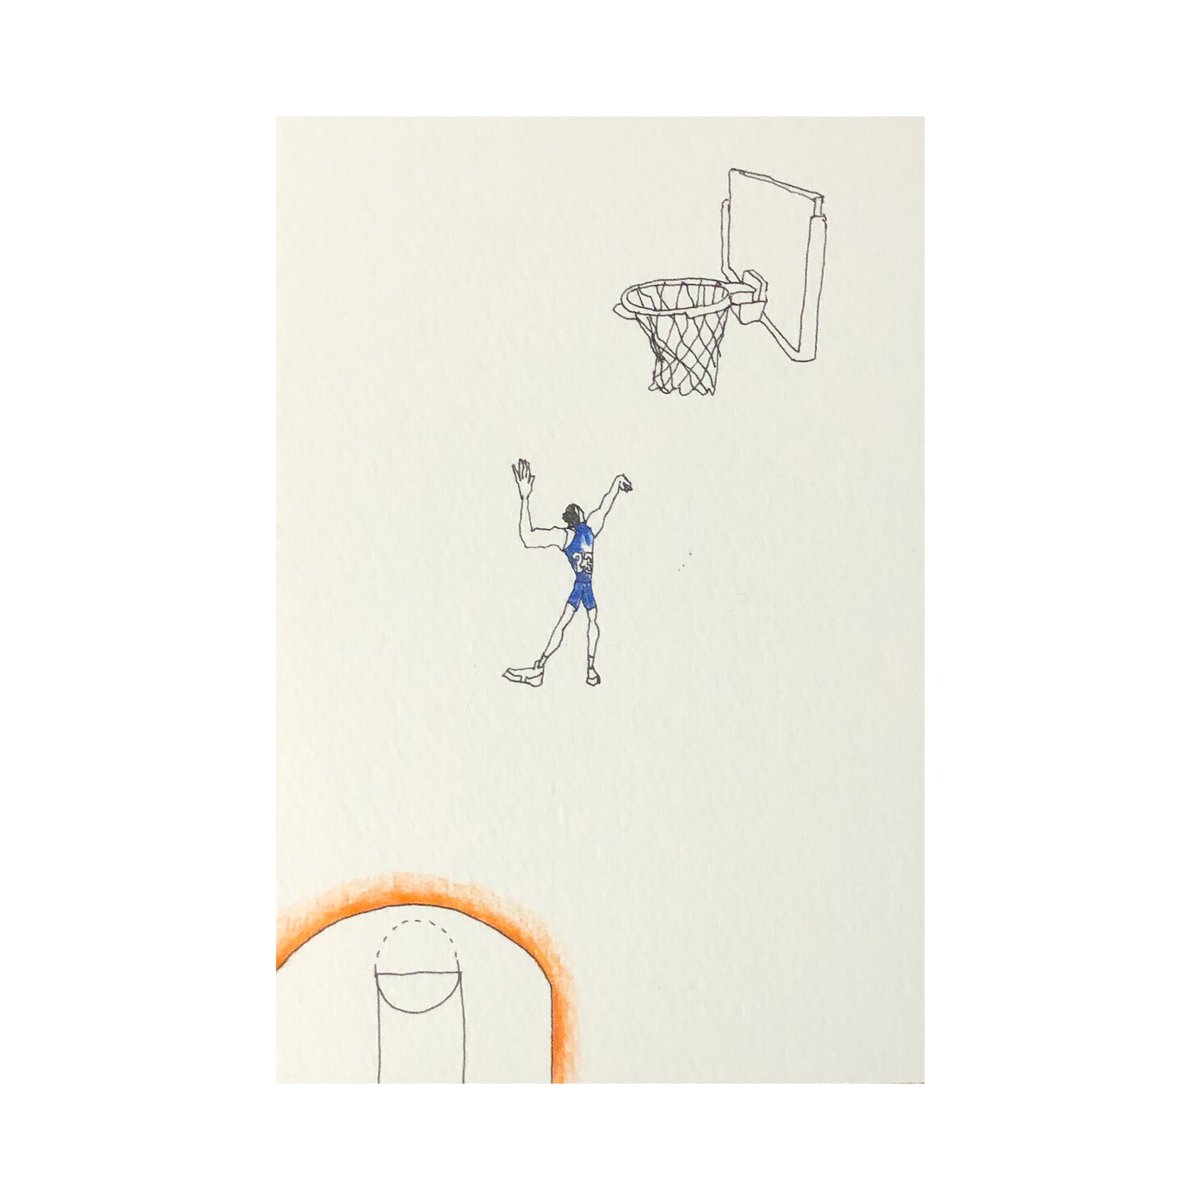 Yu New York Knicks Mitchellrobinson Illustration Illustrations Drawing Artwork Art Artist Contemporaryart Newyork Nyc Newyorker Basketball Nba Knicks Newyorkknicks Knion Nyknicks Sports Adidas Nike イラスト アート